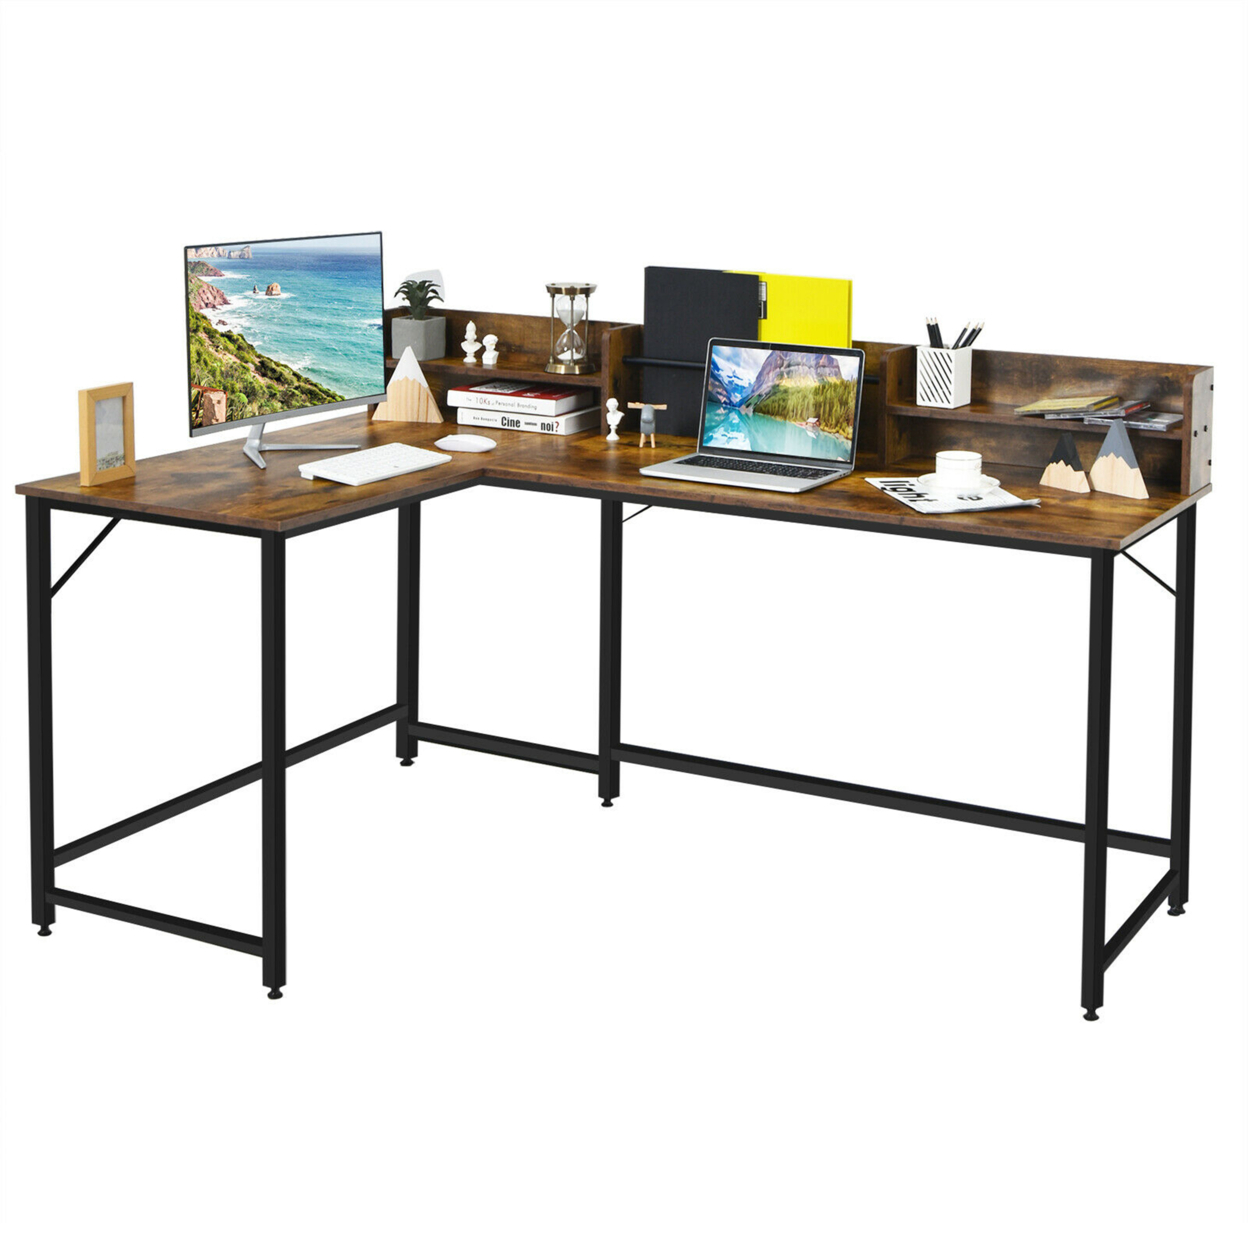 65.5'' L-shaped Computer Desk Home Office Corner Table W/Bookshelf - Rustic Brown